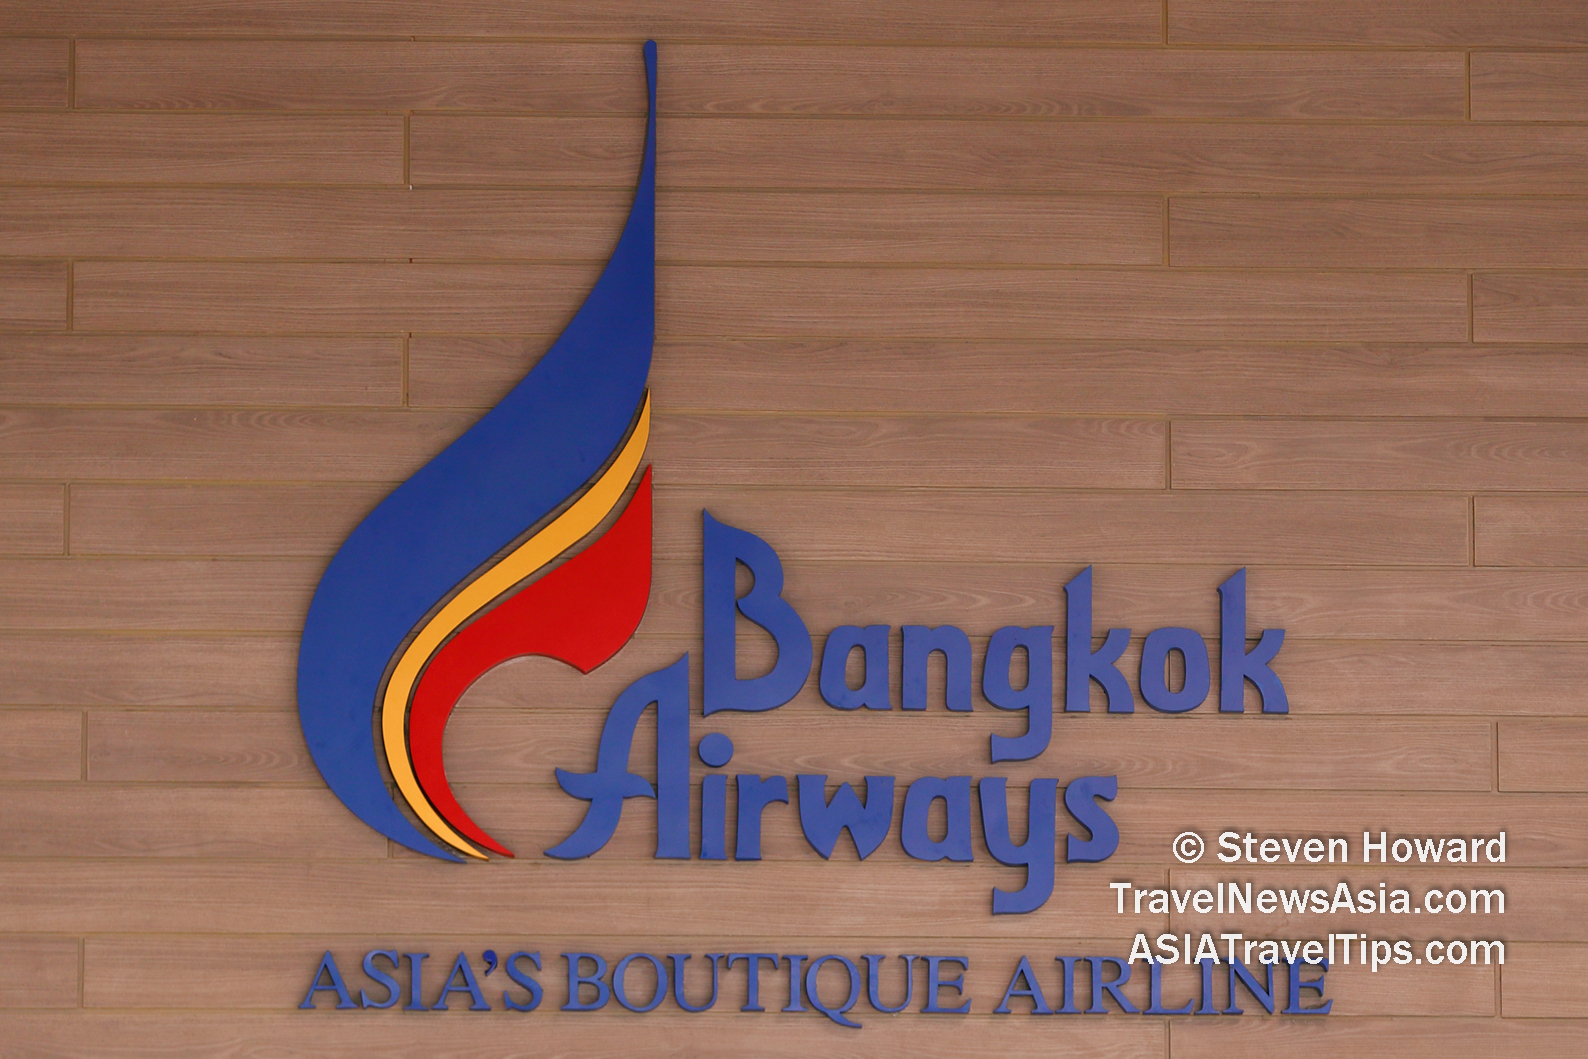 Bangkok Airways' logo at one of its lounges at Suvarnabhumi Int. Airport (BKK) near Bangkok, Thailand. Picture by Steven Howard of TravelNewsAsia.com Click to enlarge.